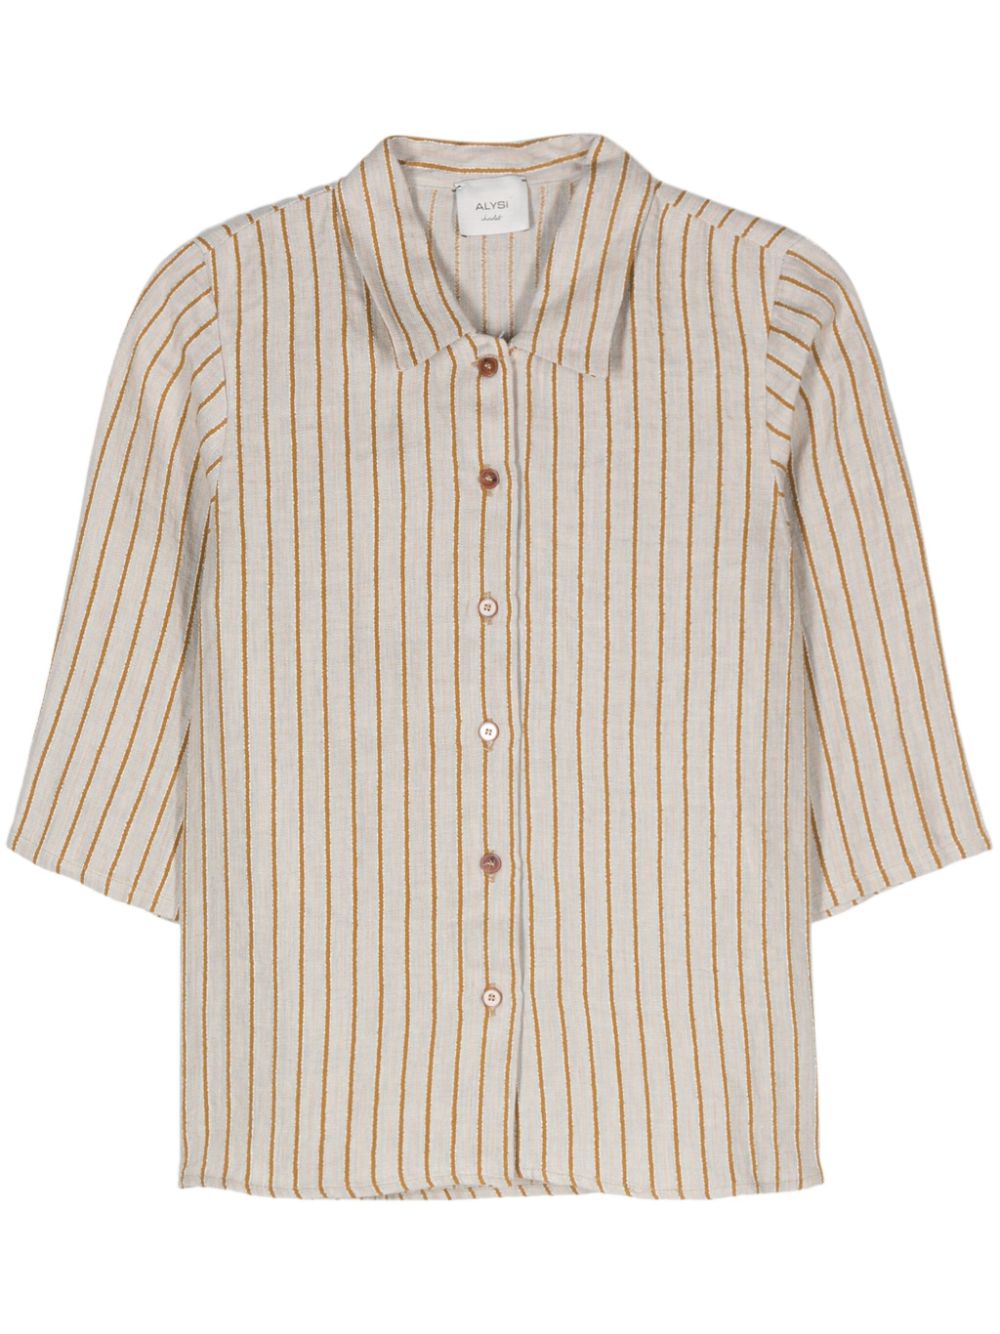 Alysi ALYSI- Striped Shirt